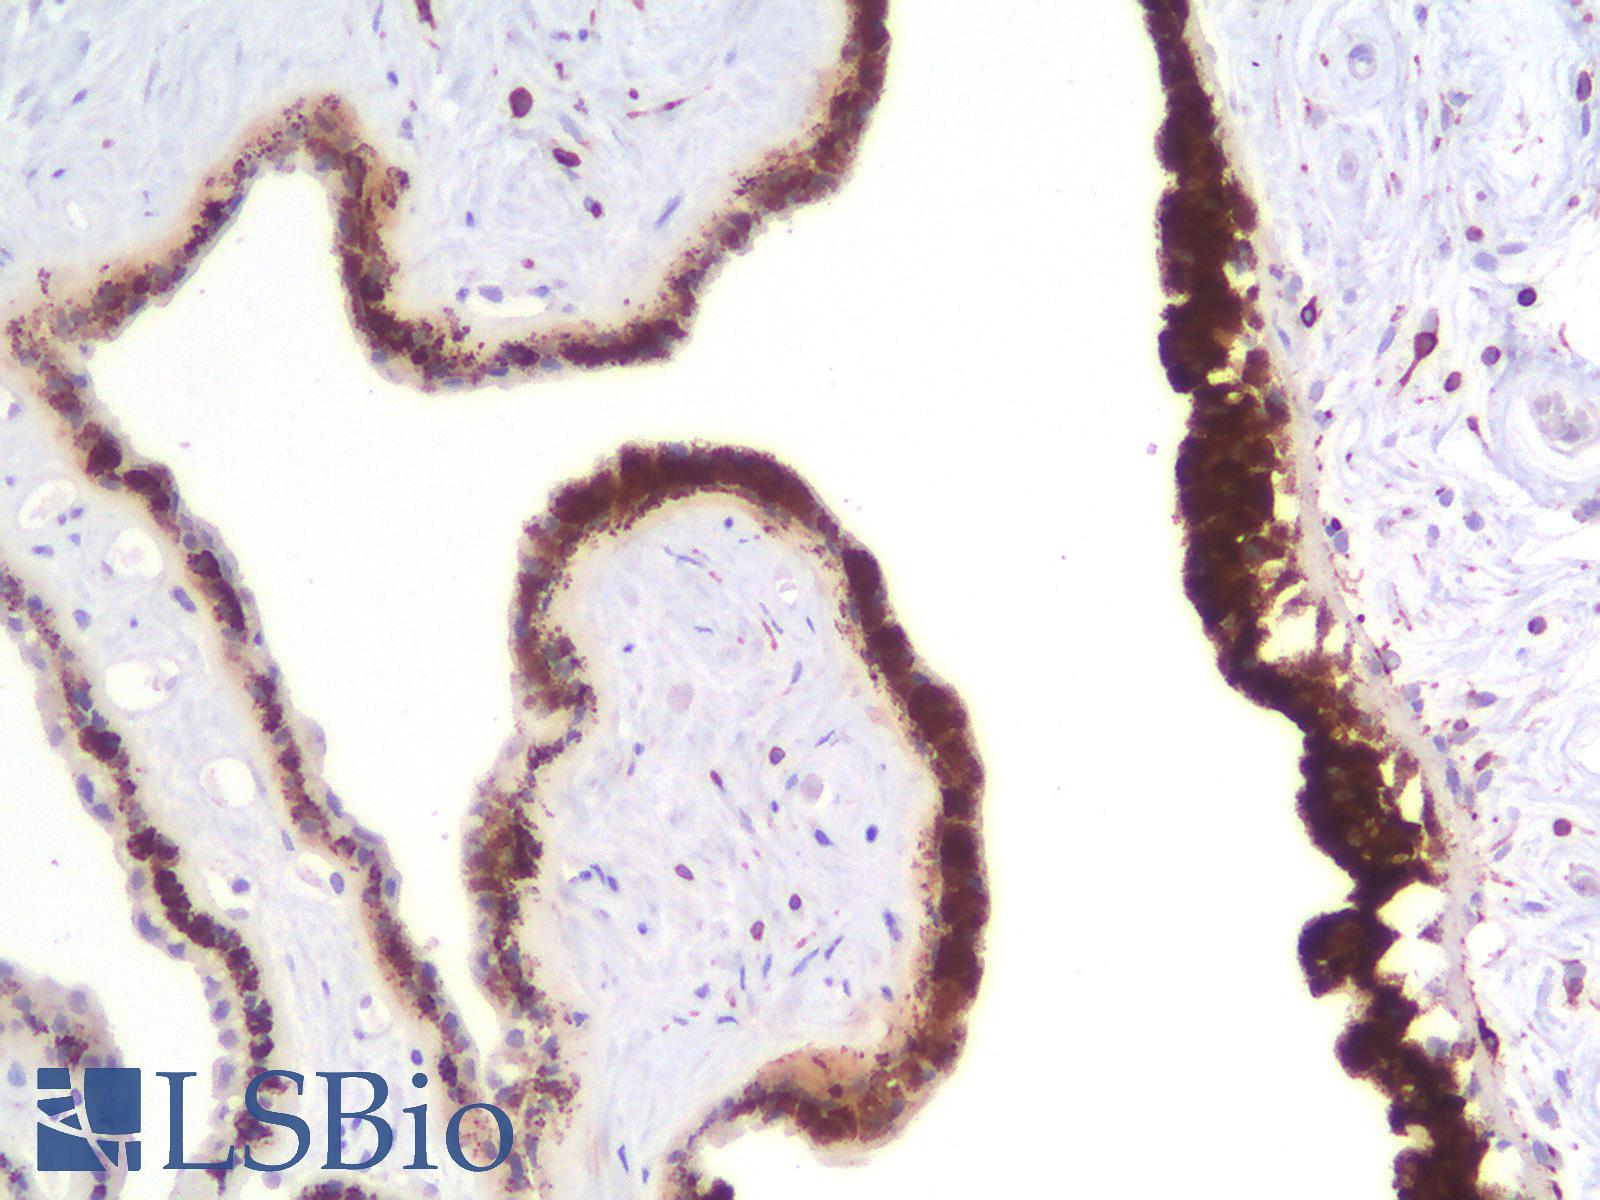 MLANA / Melan-A Antibody - Human Skin: Formalin-Fixed, Paraffin-Embedded (FFPE)